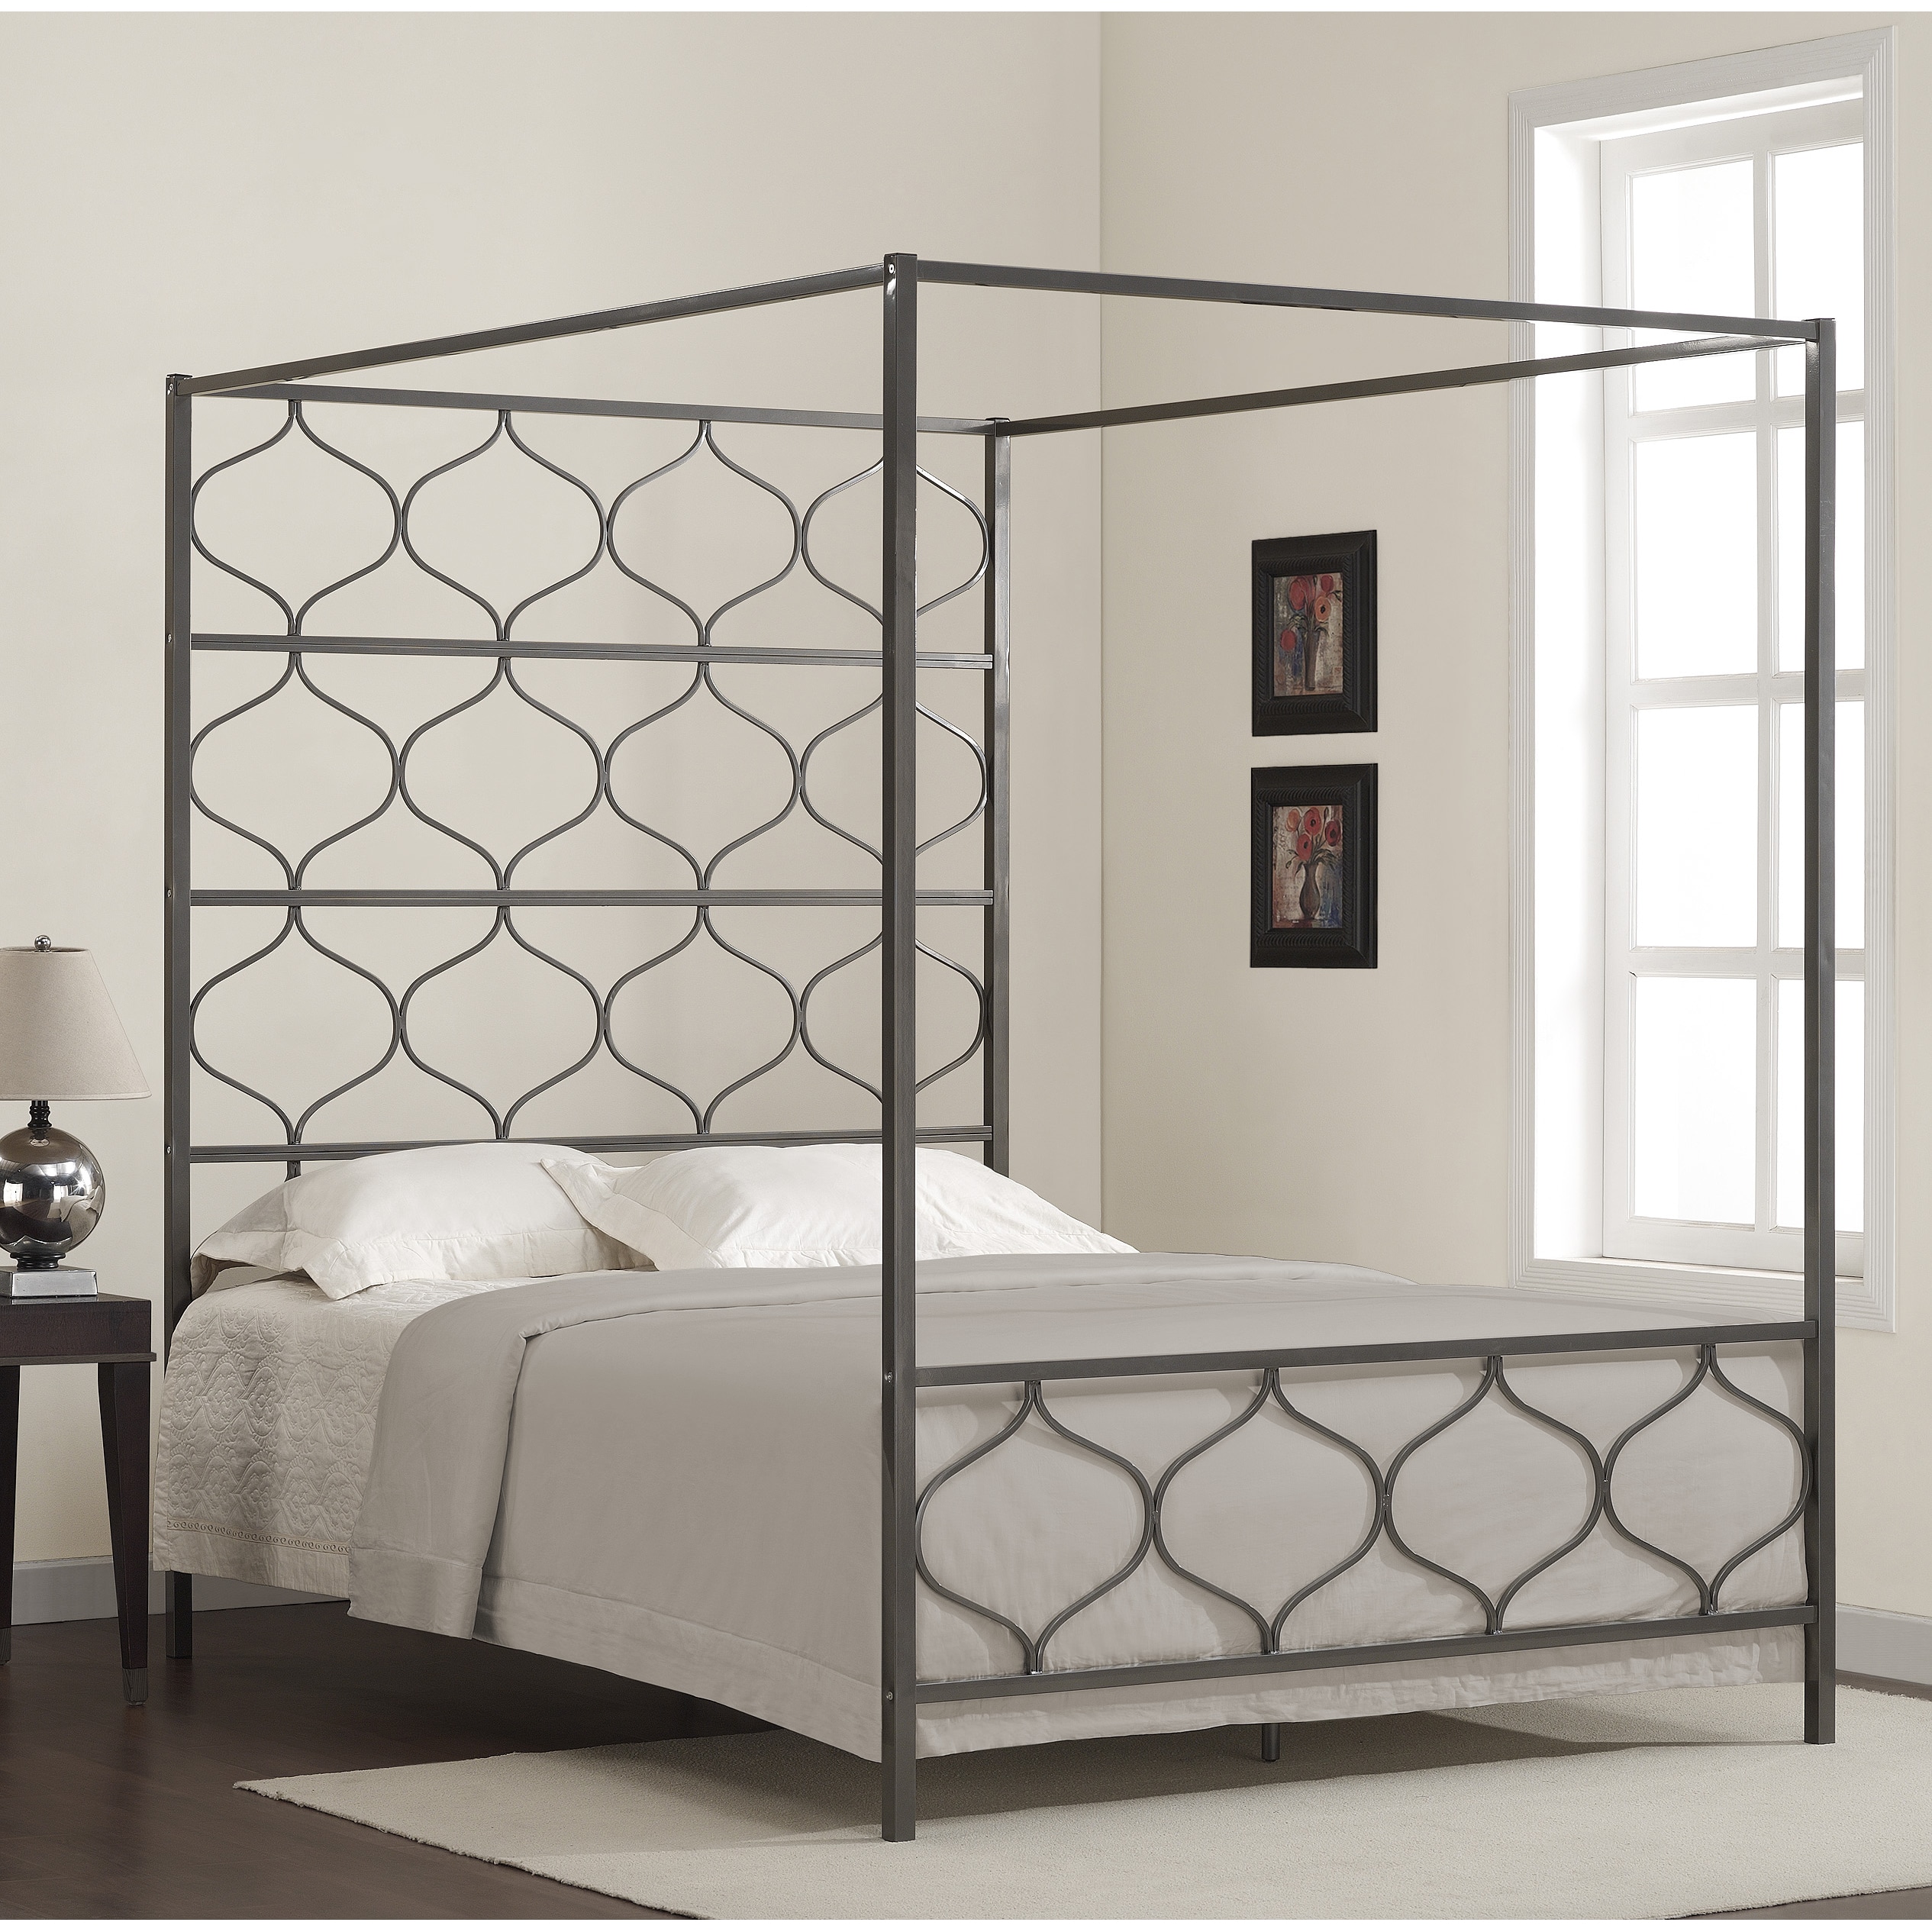 Dimensions Marnie Queen Canopy Bed Metallic Size Queen